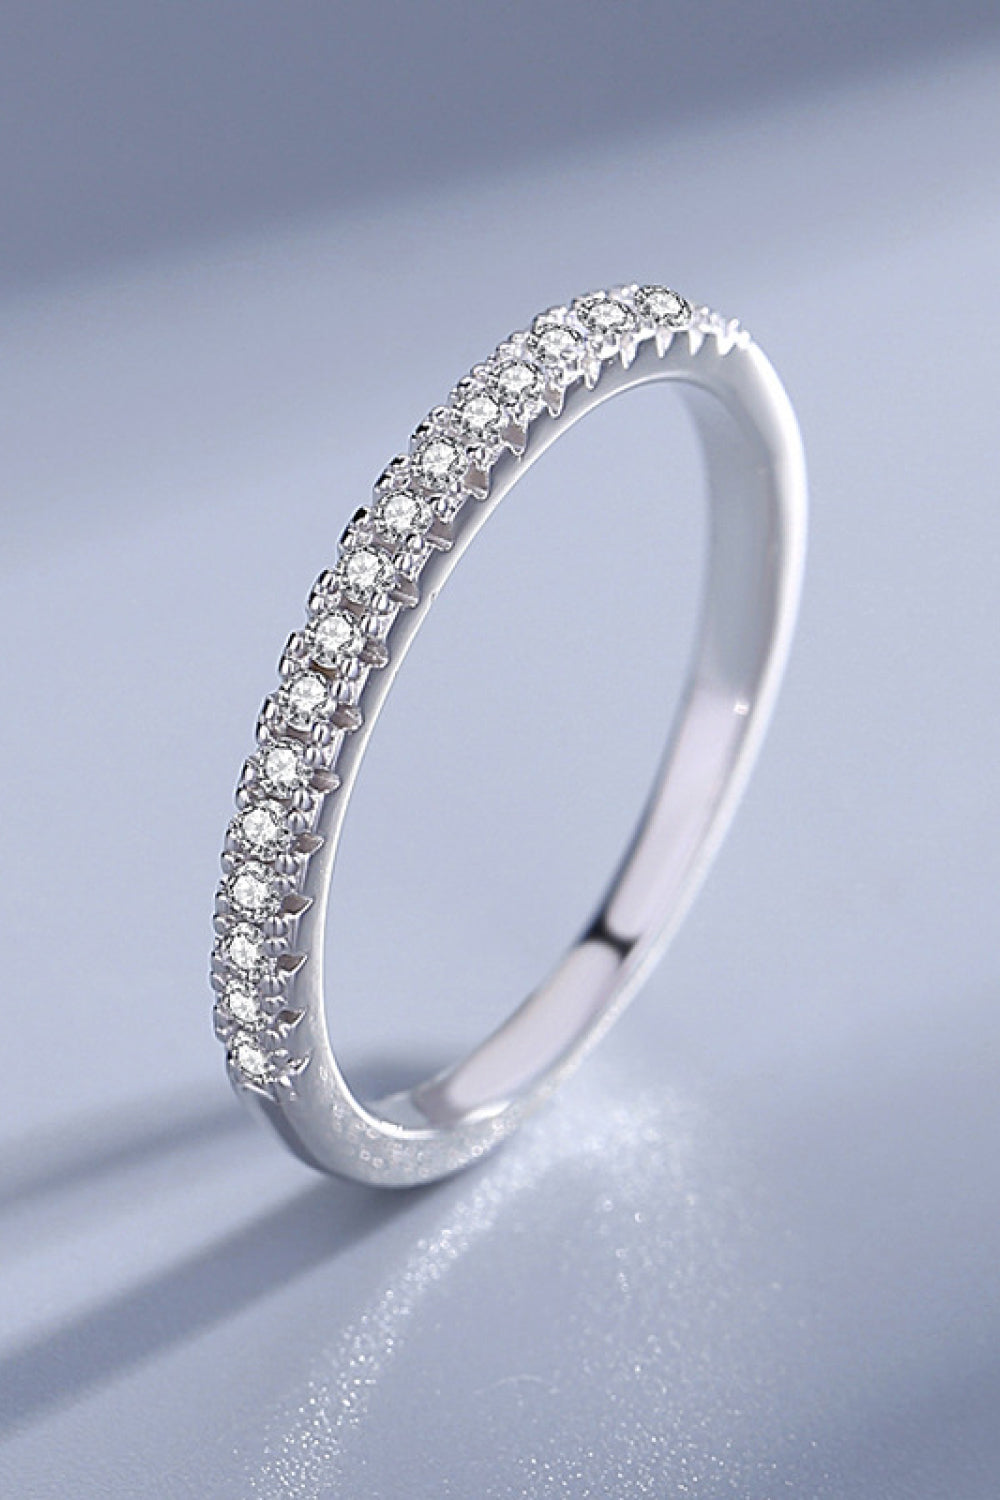 Glamorous Always Inlaid Cubic Zirconia Ring